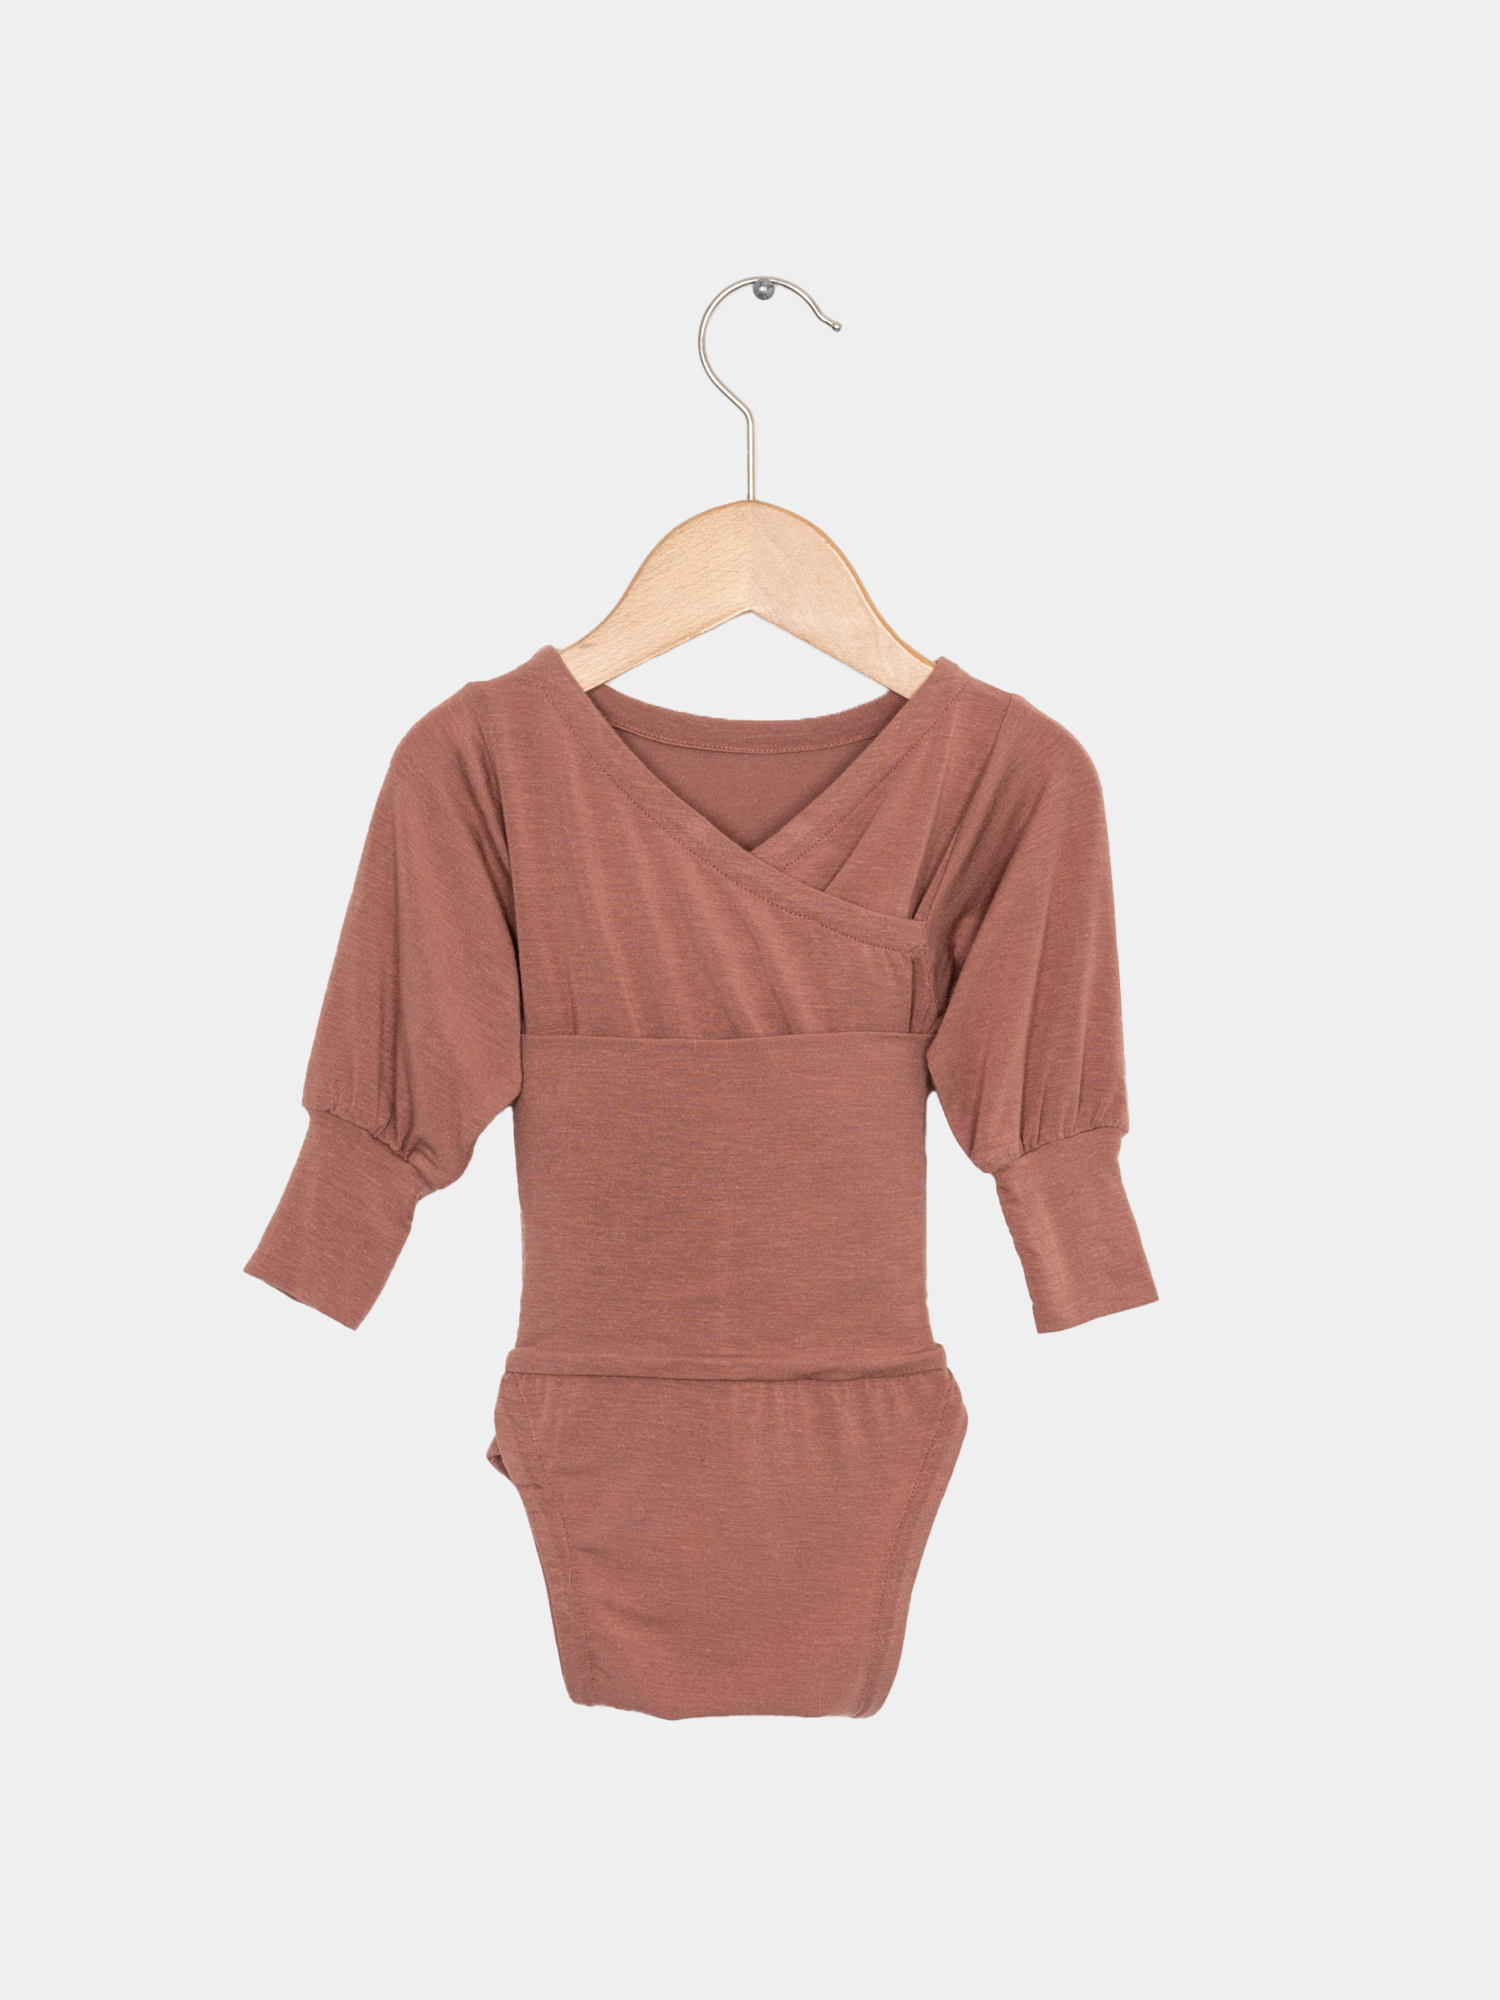 Loopbody cashmere blend - growing baby bodysuit - cinnamon